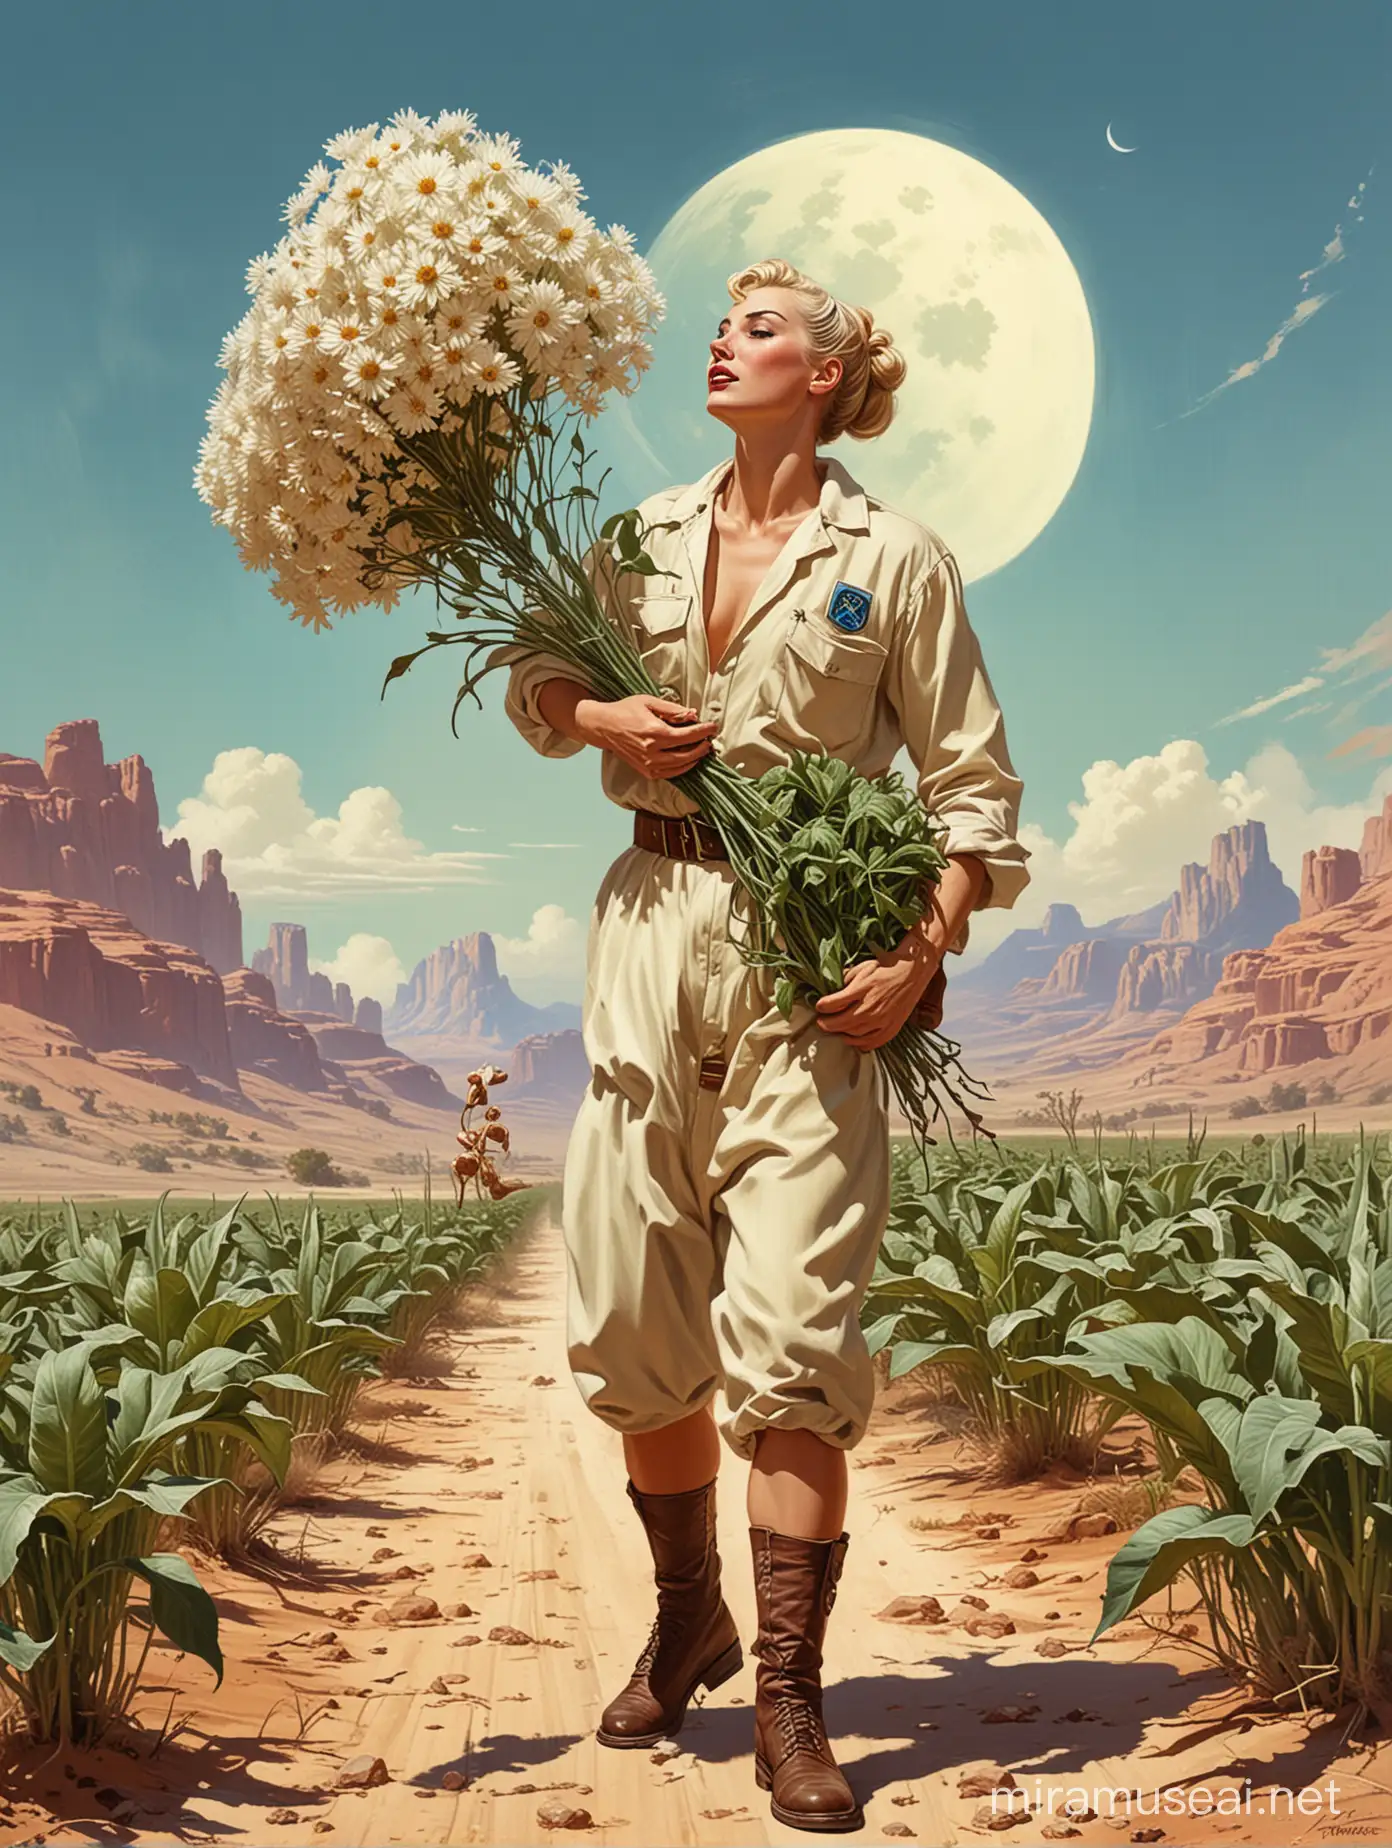 Vintage SciFi Harvest Humorous Scene of an Old Farmer with Radiolara Plants